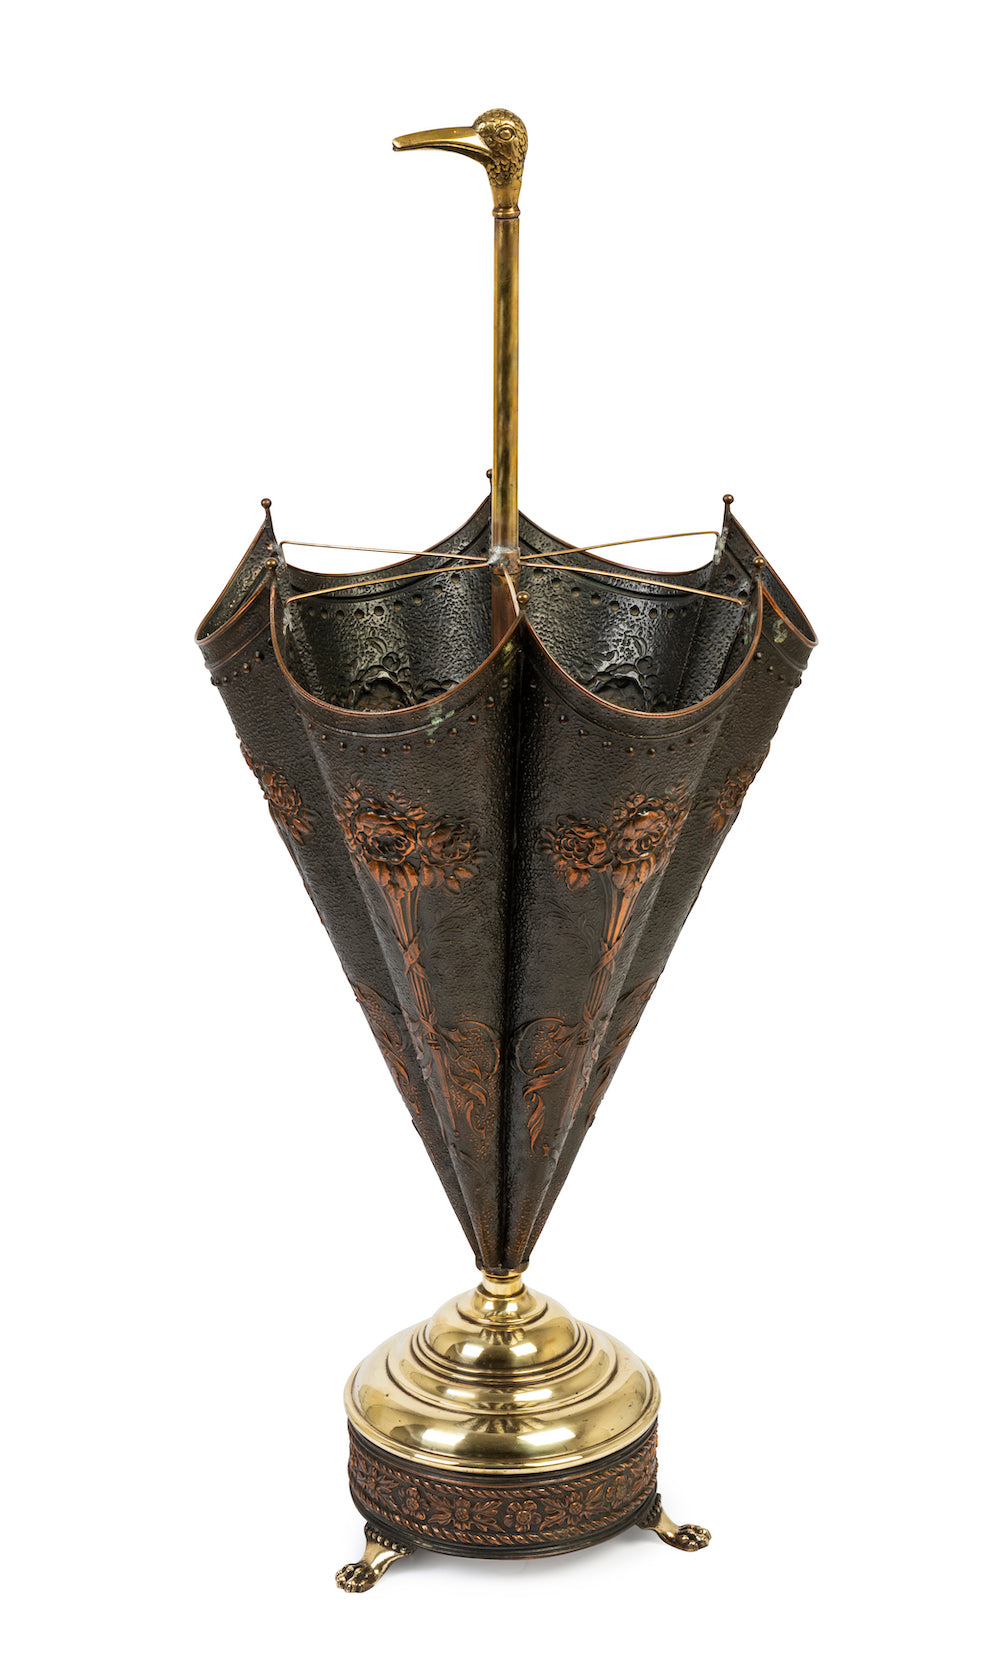 SOLD A copper and brass duck's head umbrella stand, French Circa 1920